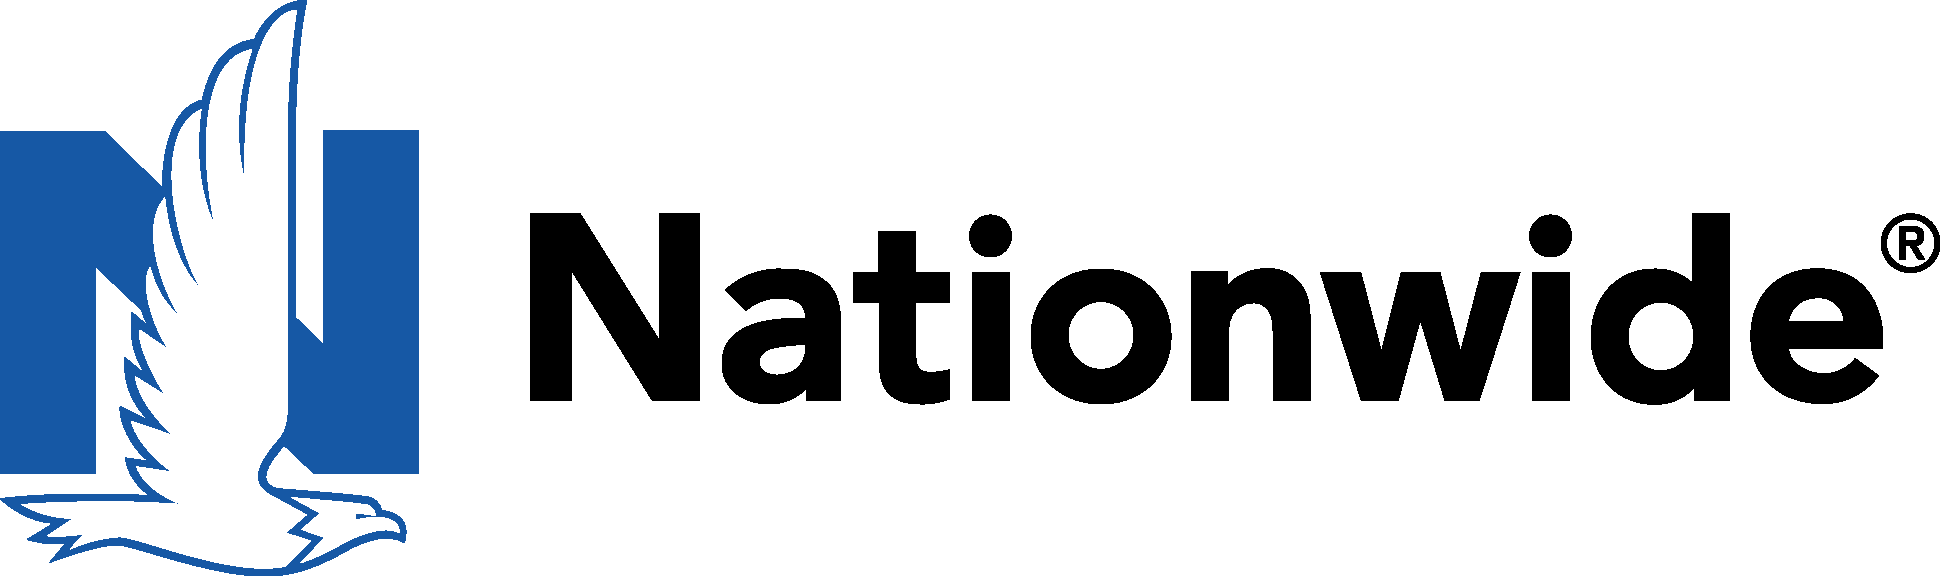 nationwide-logo-1